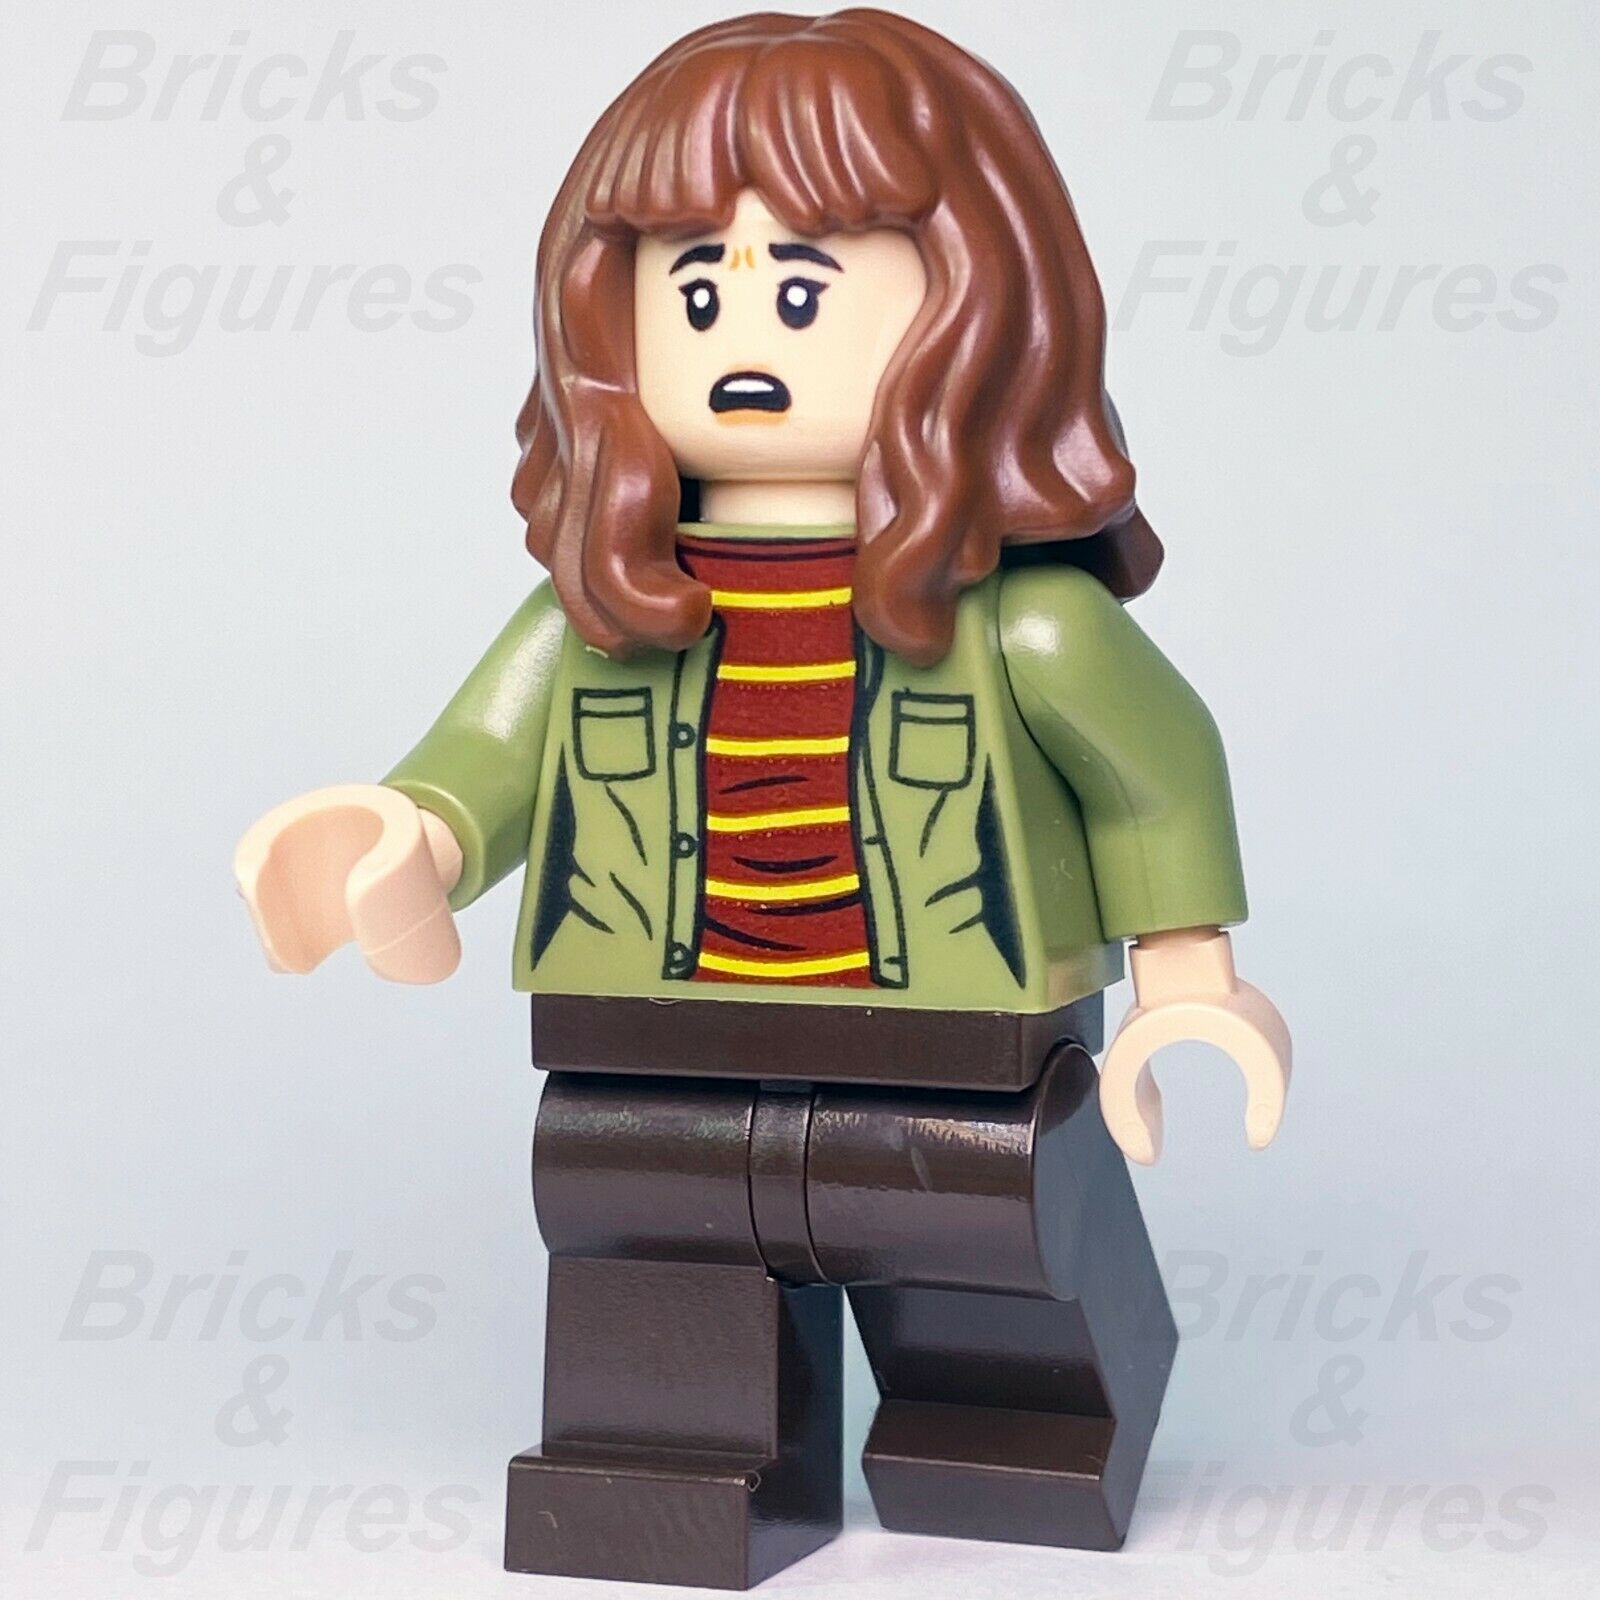 New Stranger Things LEGO Joyce Byers TV Series Minifigure from set 75810 - Bricks & Figures